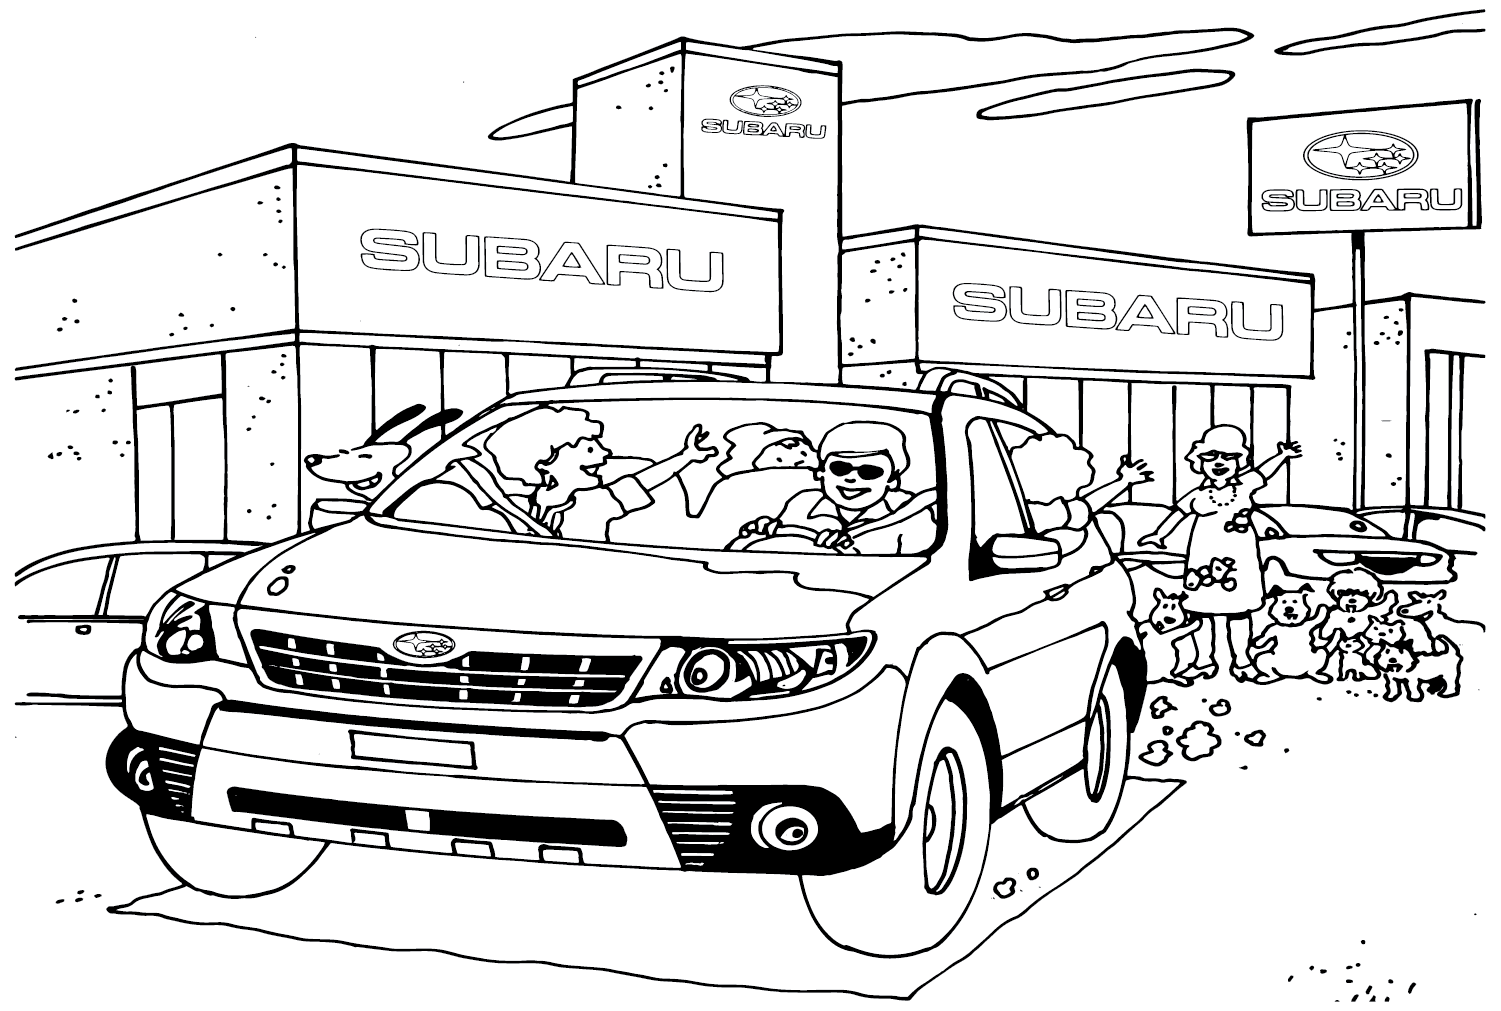 Subaru Coloring Page from Subaru